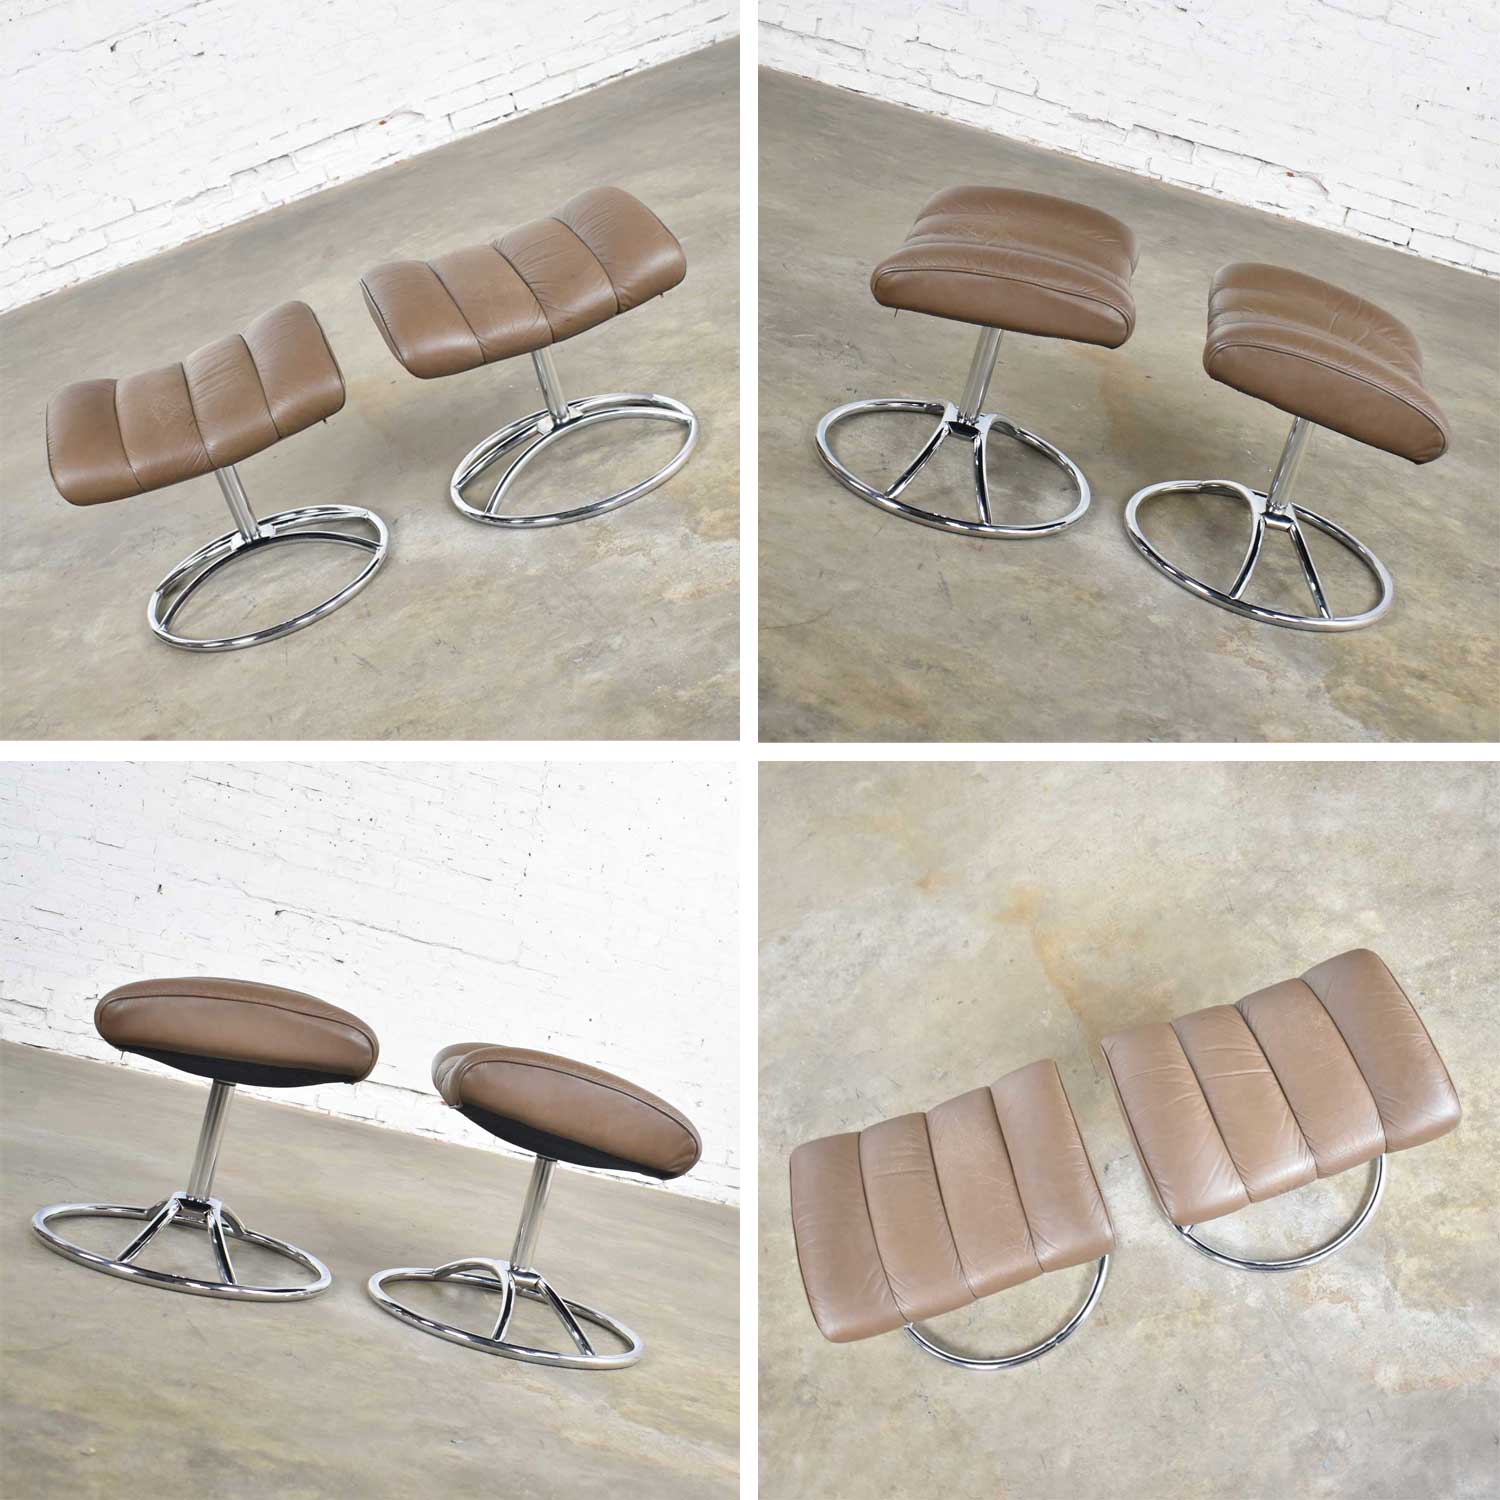 Ekornes Stressless Scandinavian Modern Pair Lounge Chairs & Ottomans Leather Chrome 1971-1994